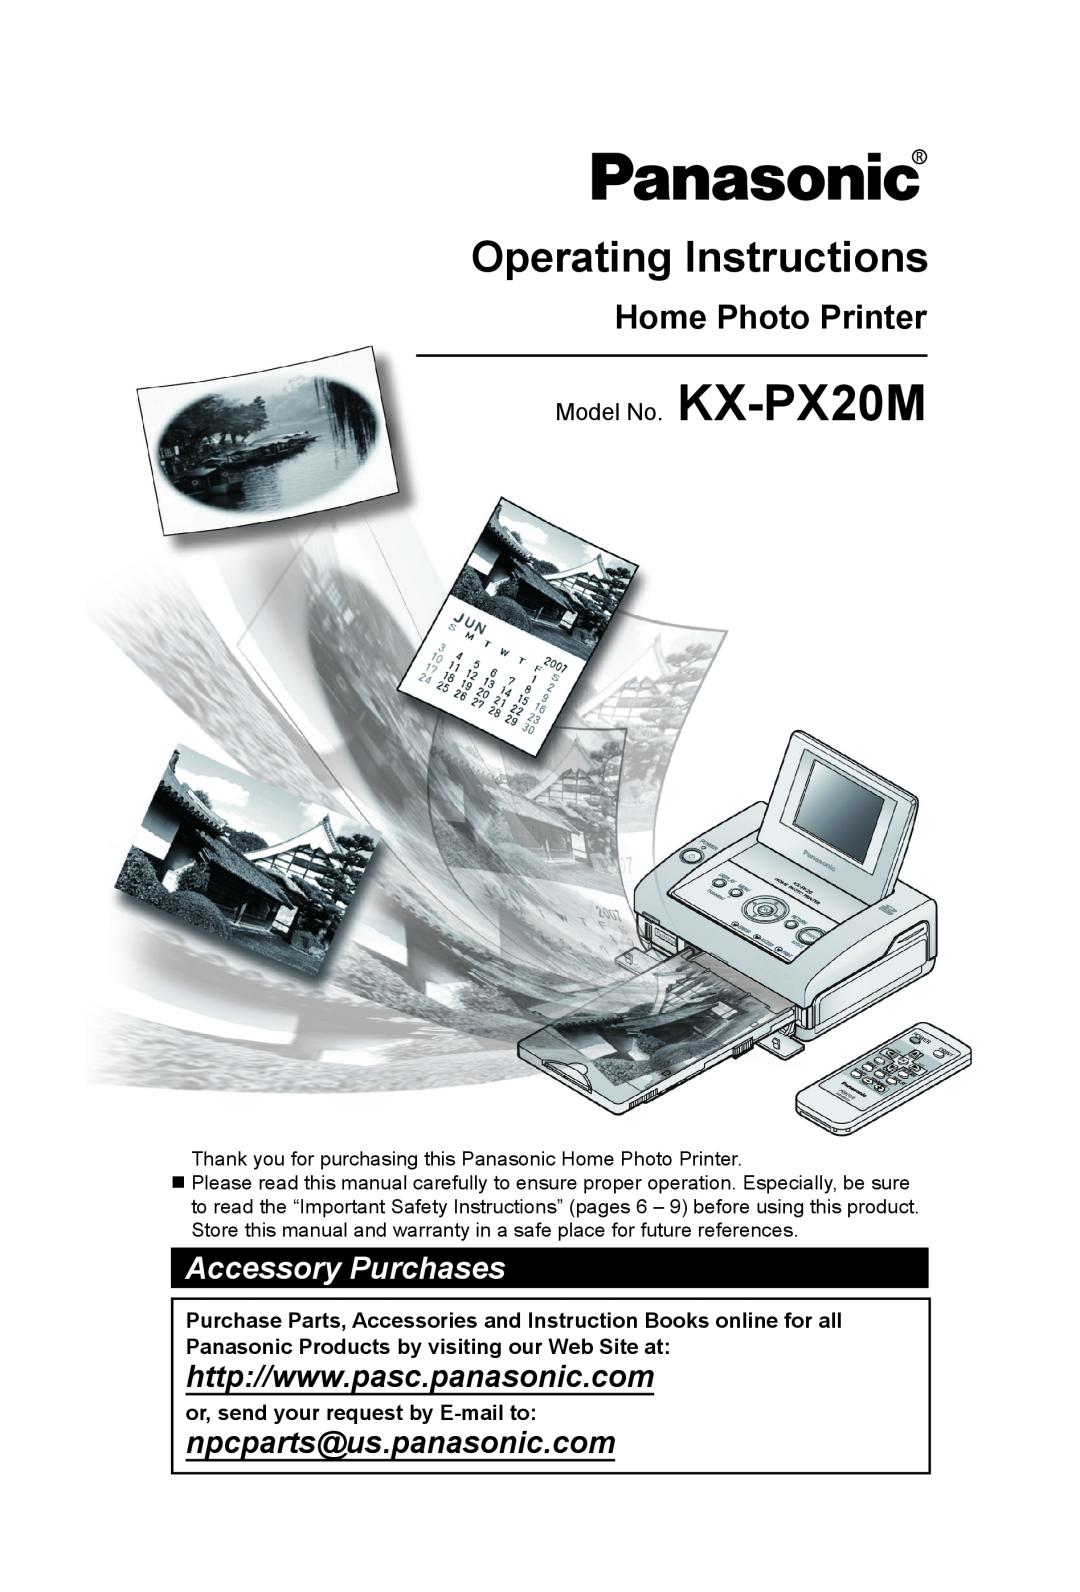 Panasonic KX-PX20M operating instructions Operating Instructions, Accessory Purchases, npcparts@us.panasonic.com 